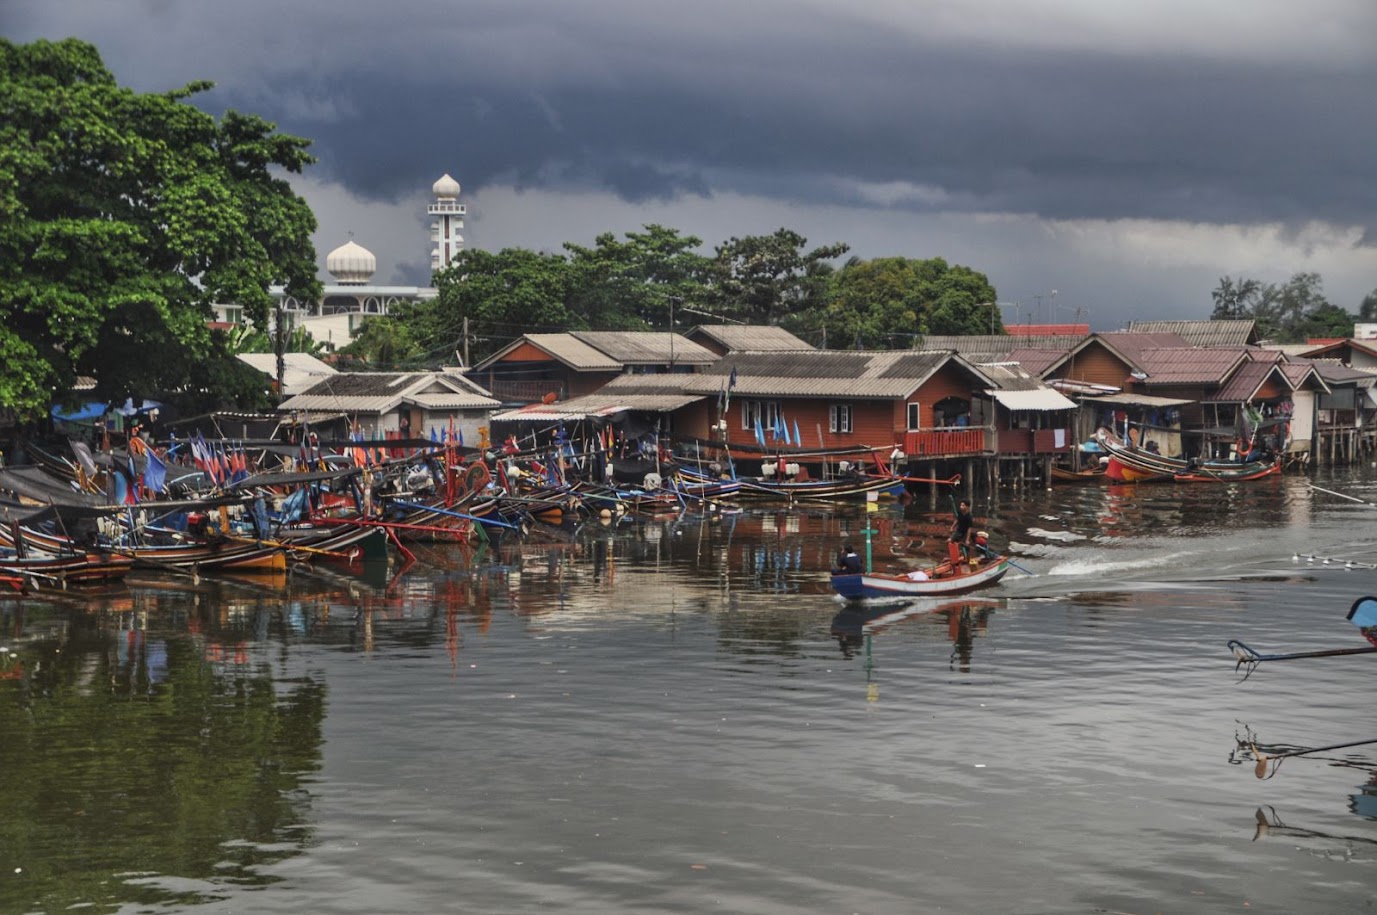 Narathiwat City
River Bang Nara
Thailand
Fishermen boats
Mosque
Stilt houses